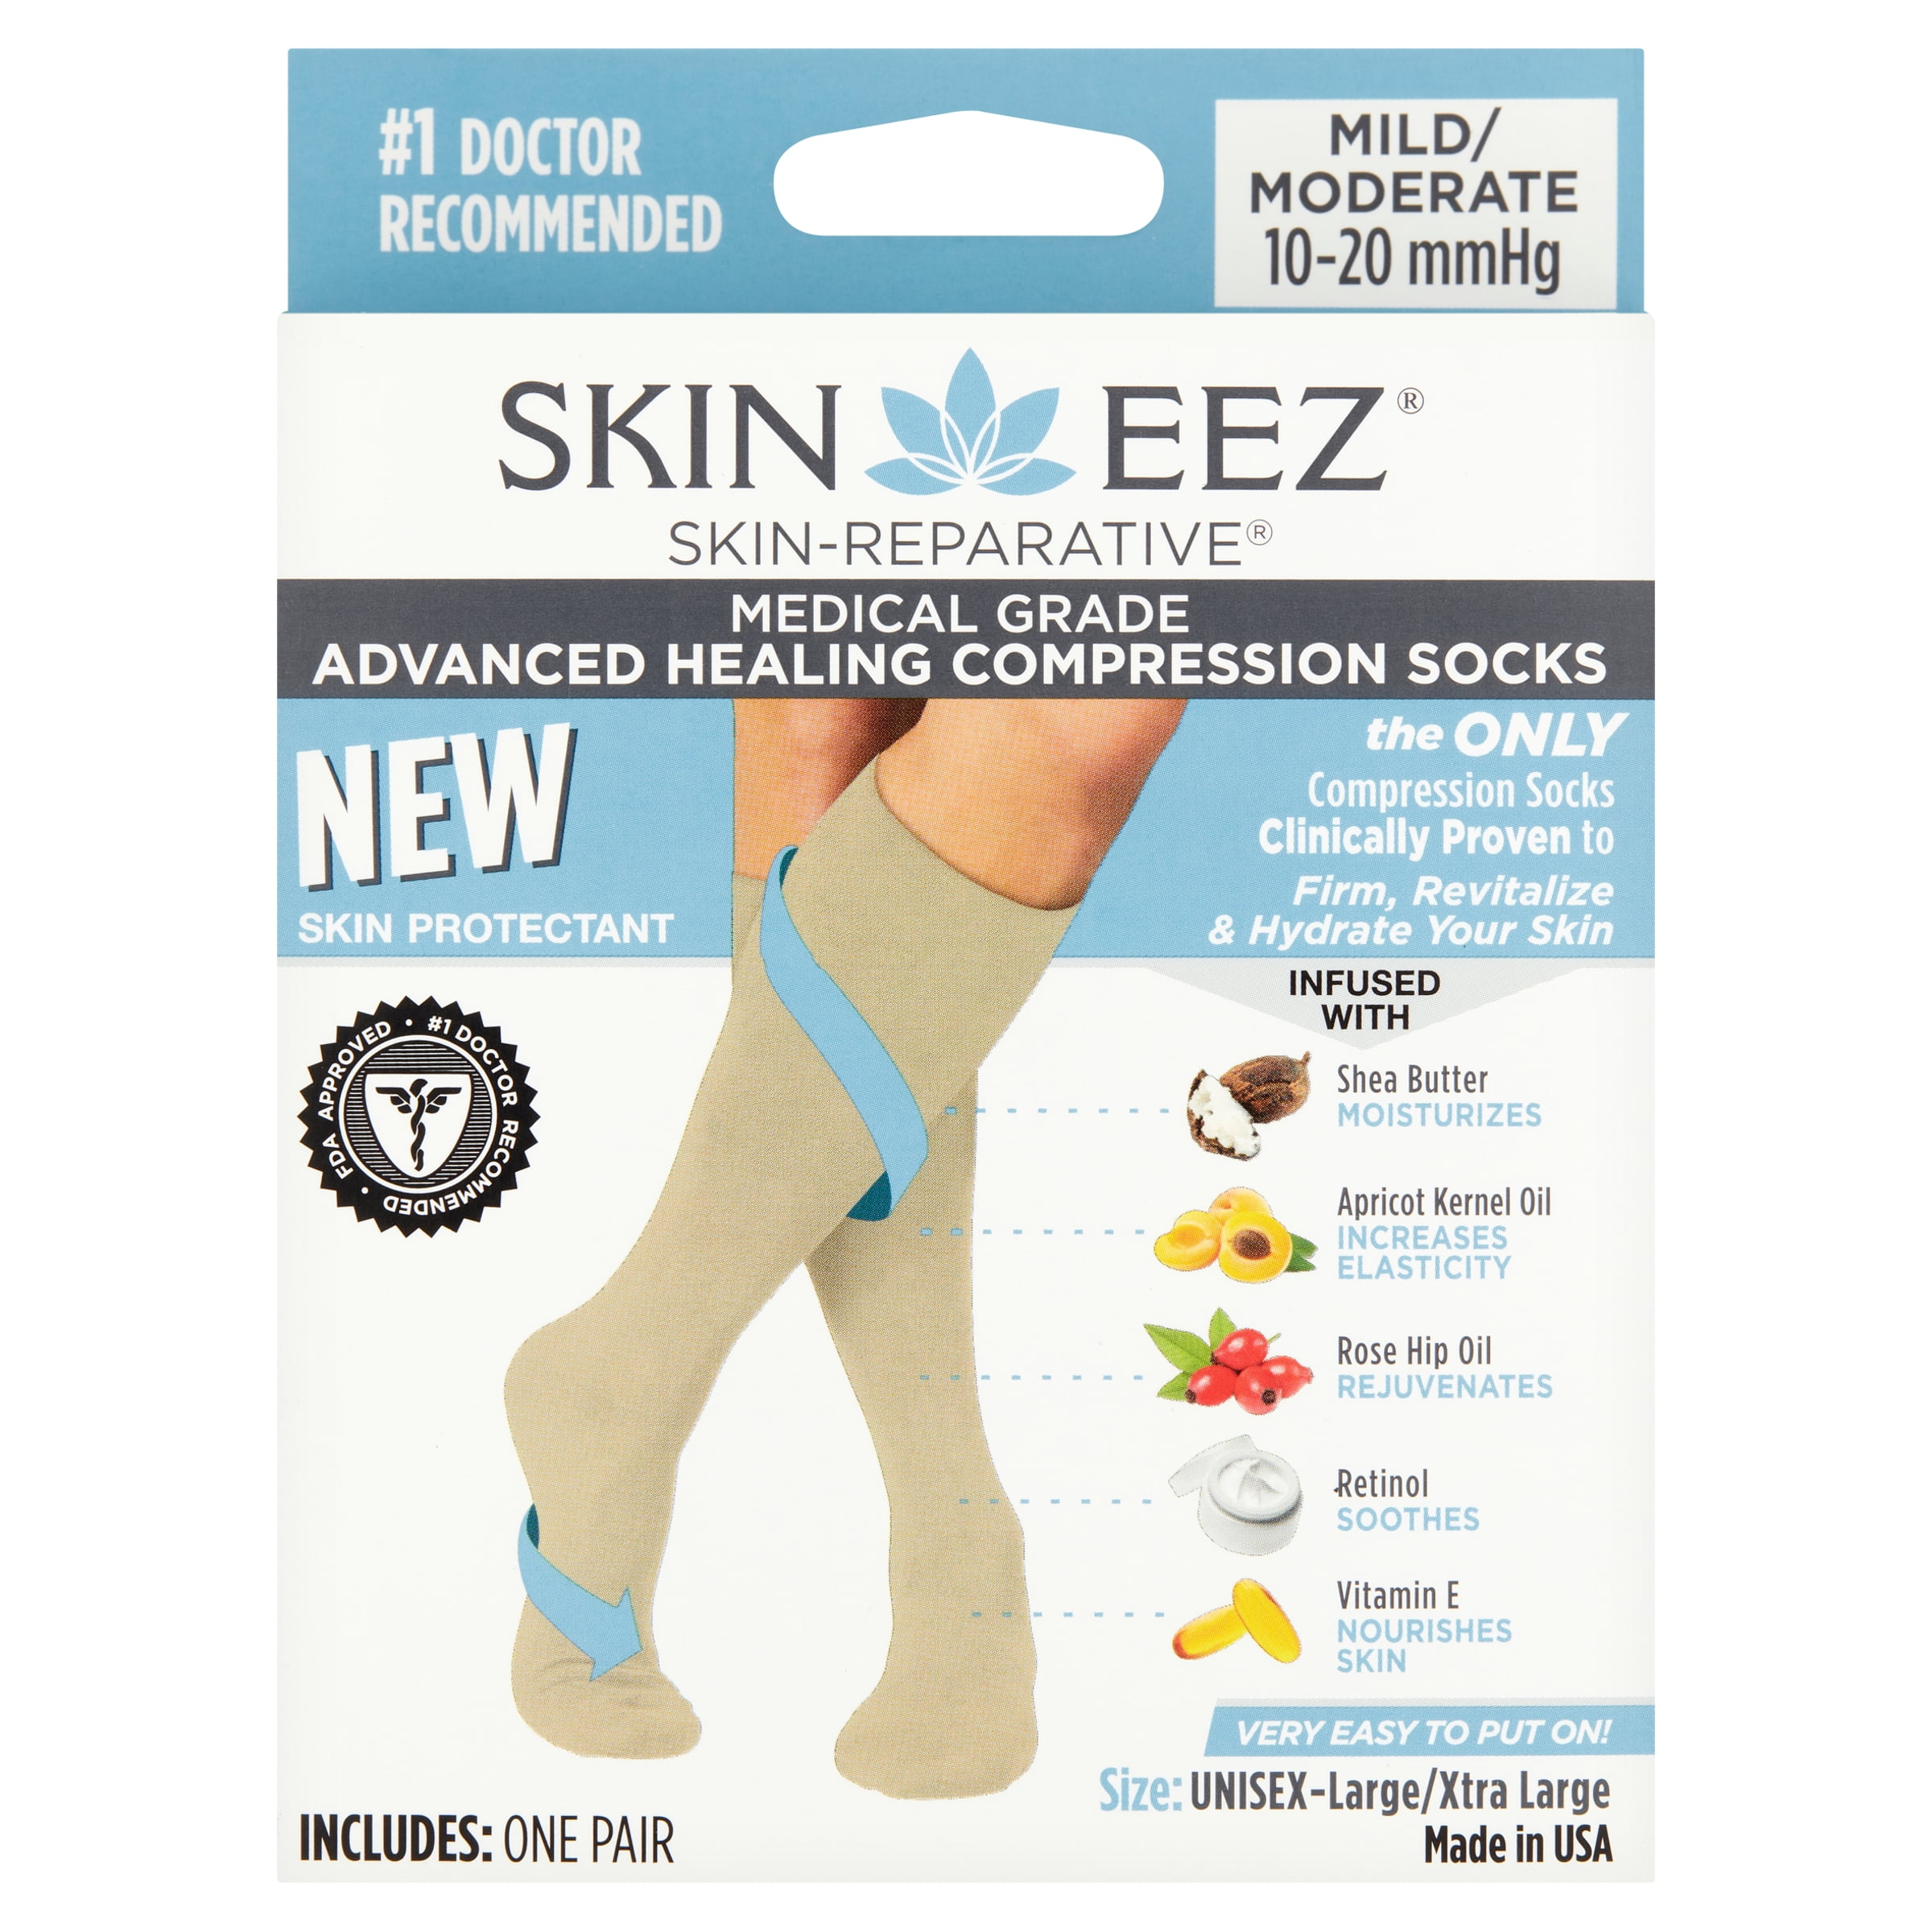 SKINEEZ tan small/medium skin-reparative hydrating compression socks ...